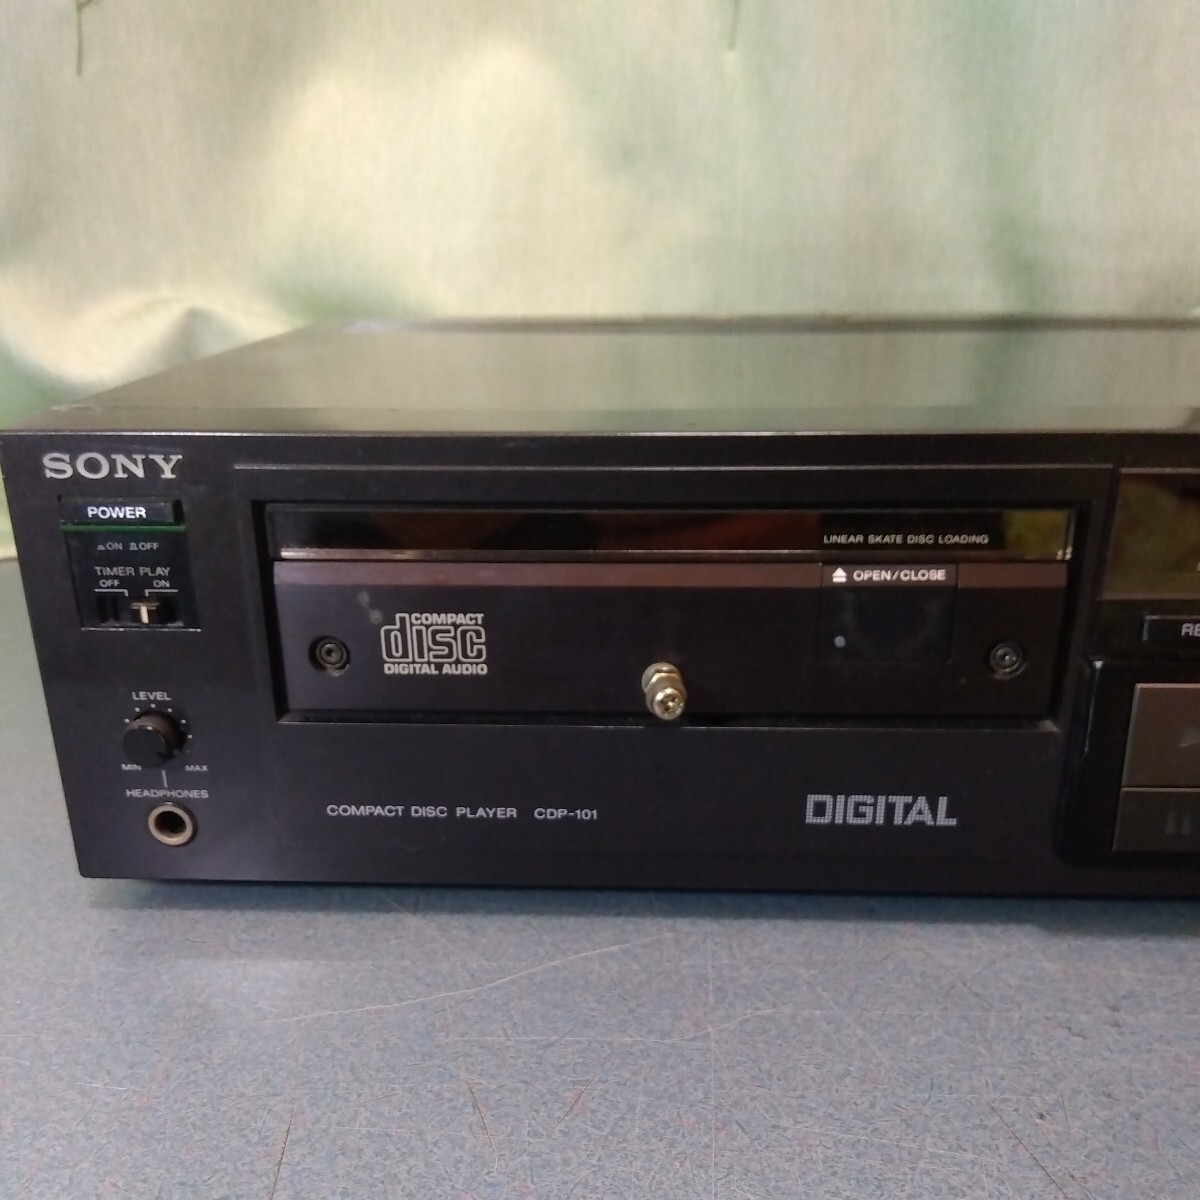 SONY Sony CD плеер CDP-101 электризация проверка settled Junk бесплатная доставка 